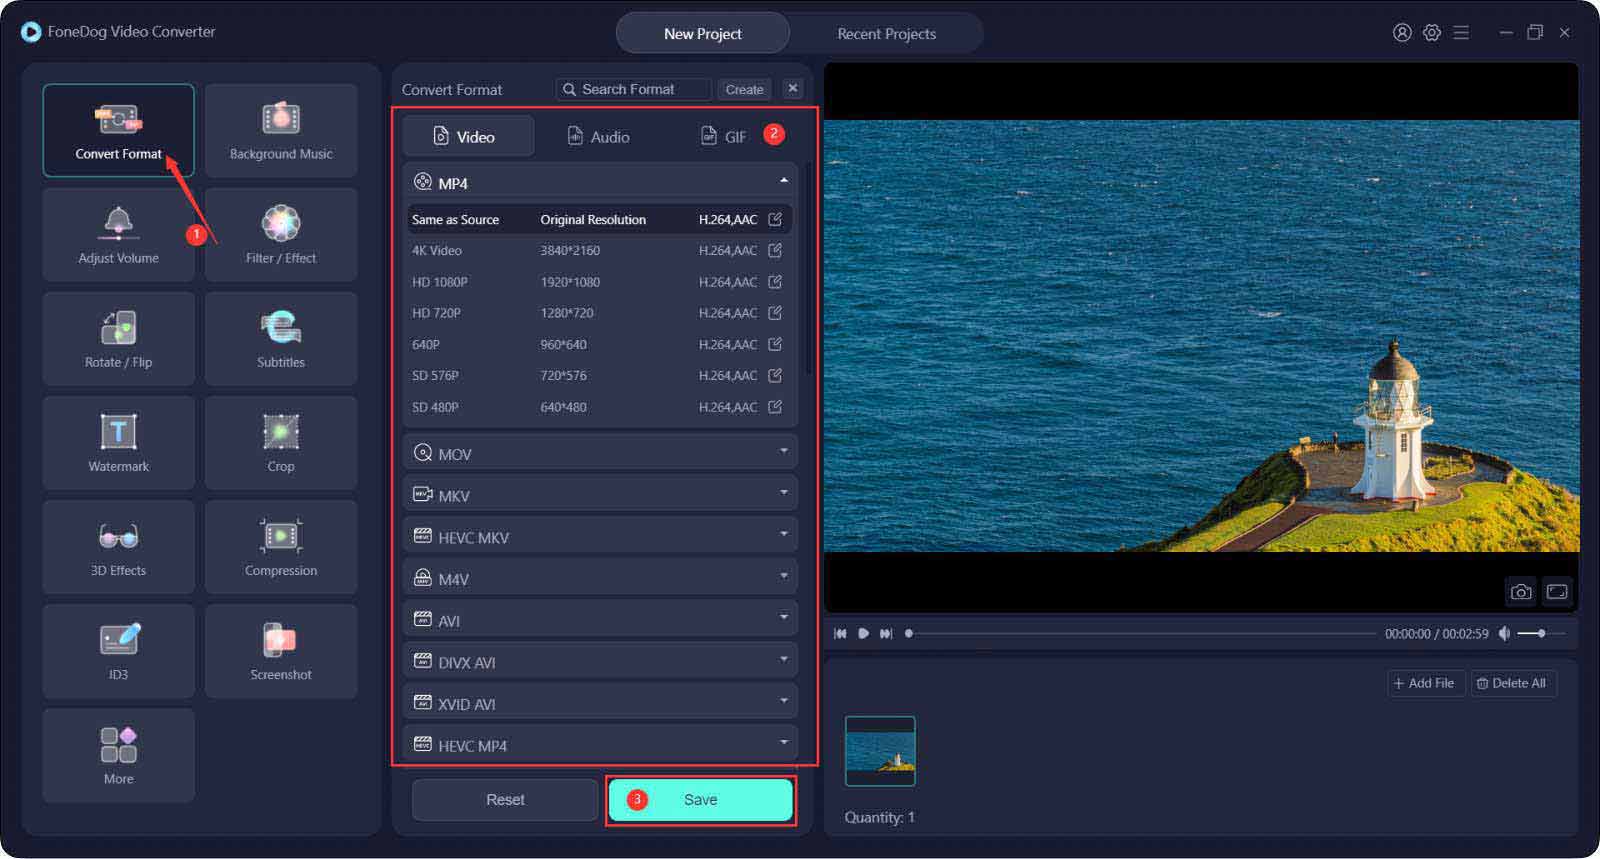 Improve Video Resolution Using FoneDog Video Converter